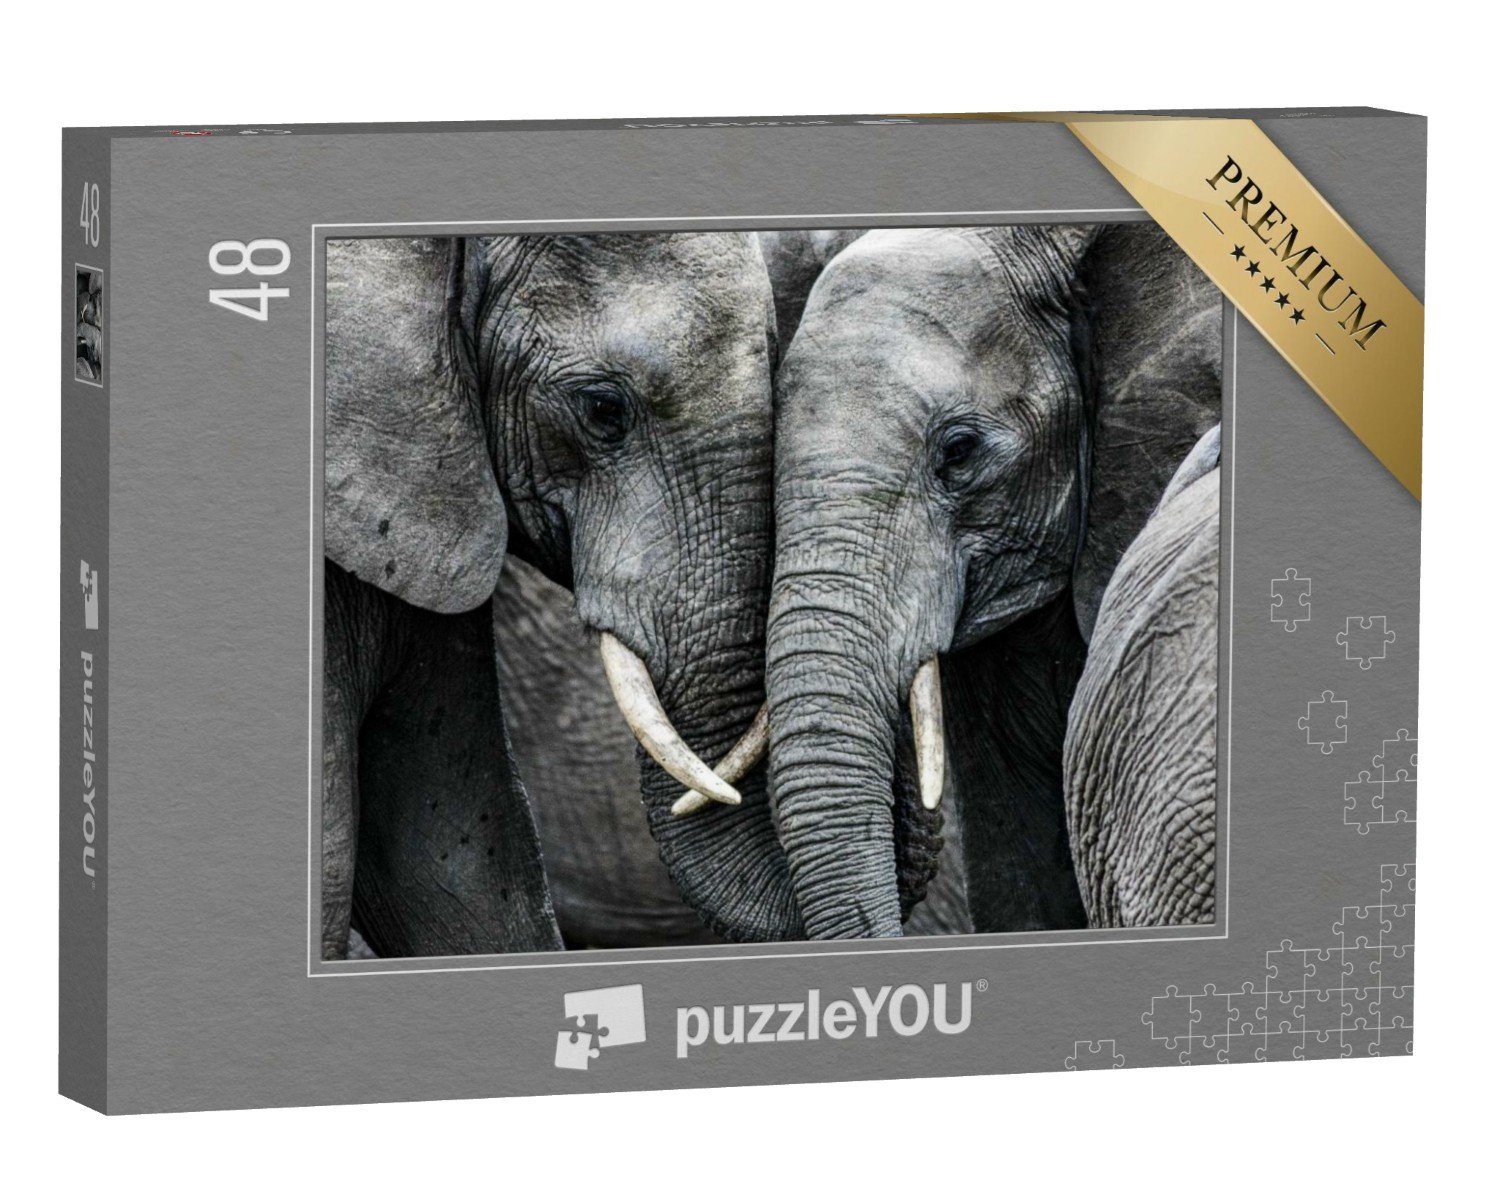 Elefanten, puzzleYOU-Kollektionen Puzzle Elefanten, Puzzleteile, Schwarz-Weiß 48 puzzleYOU